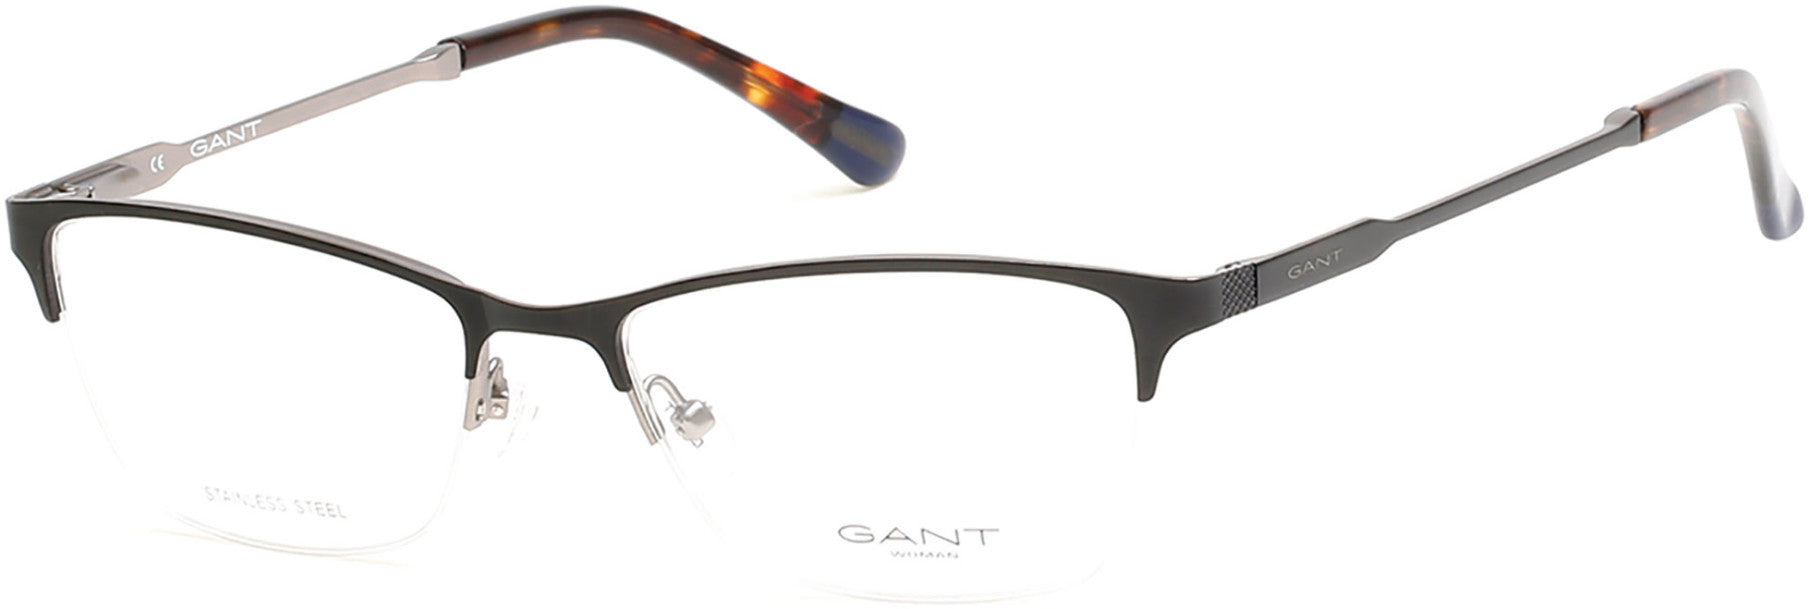 Gant GA4067 Rectangular Eyeglasses 002-002 - Matte Black